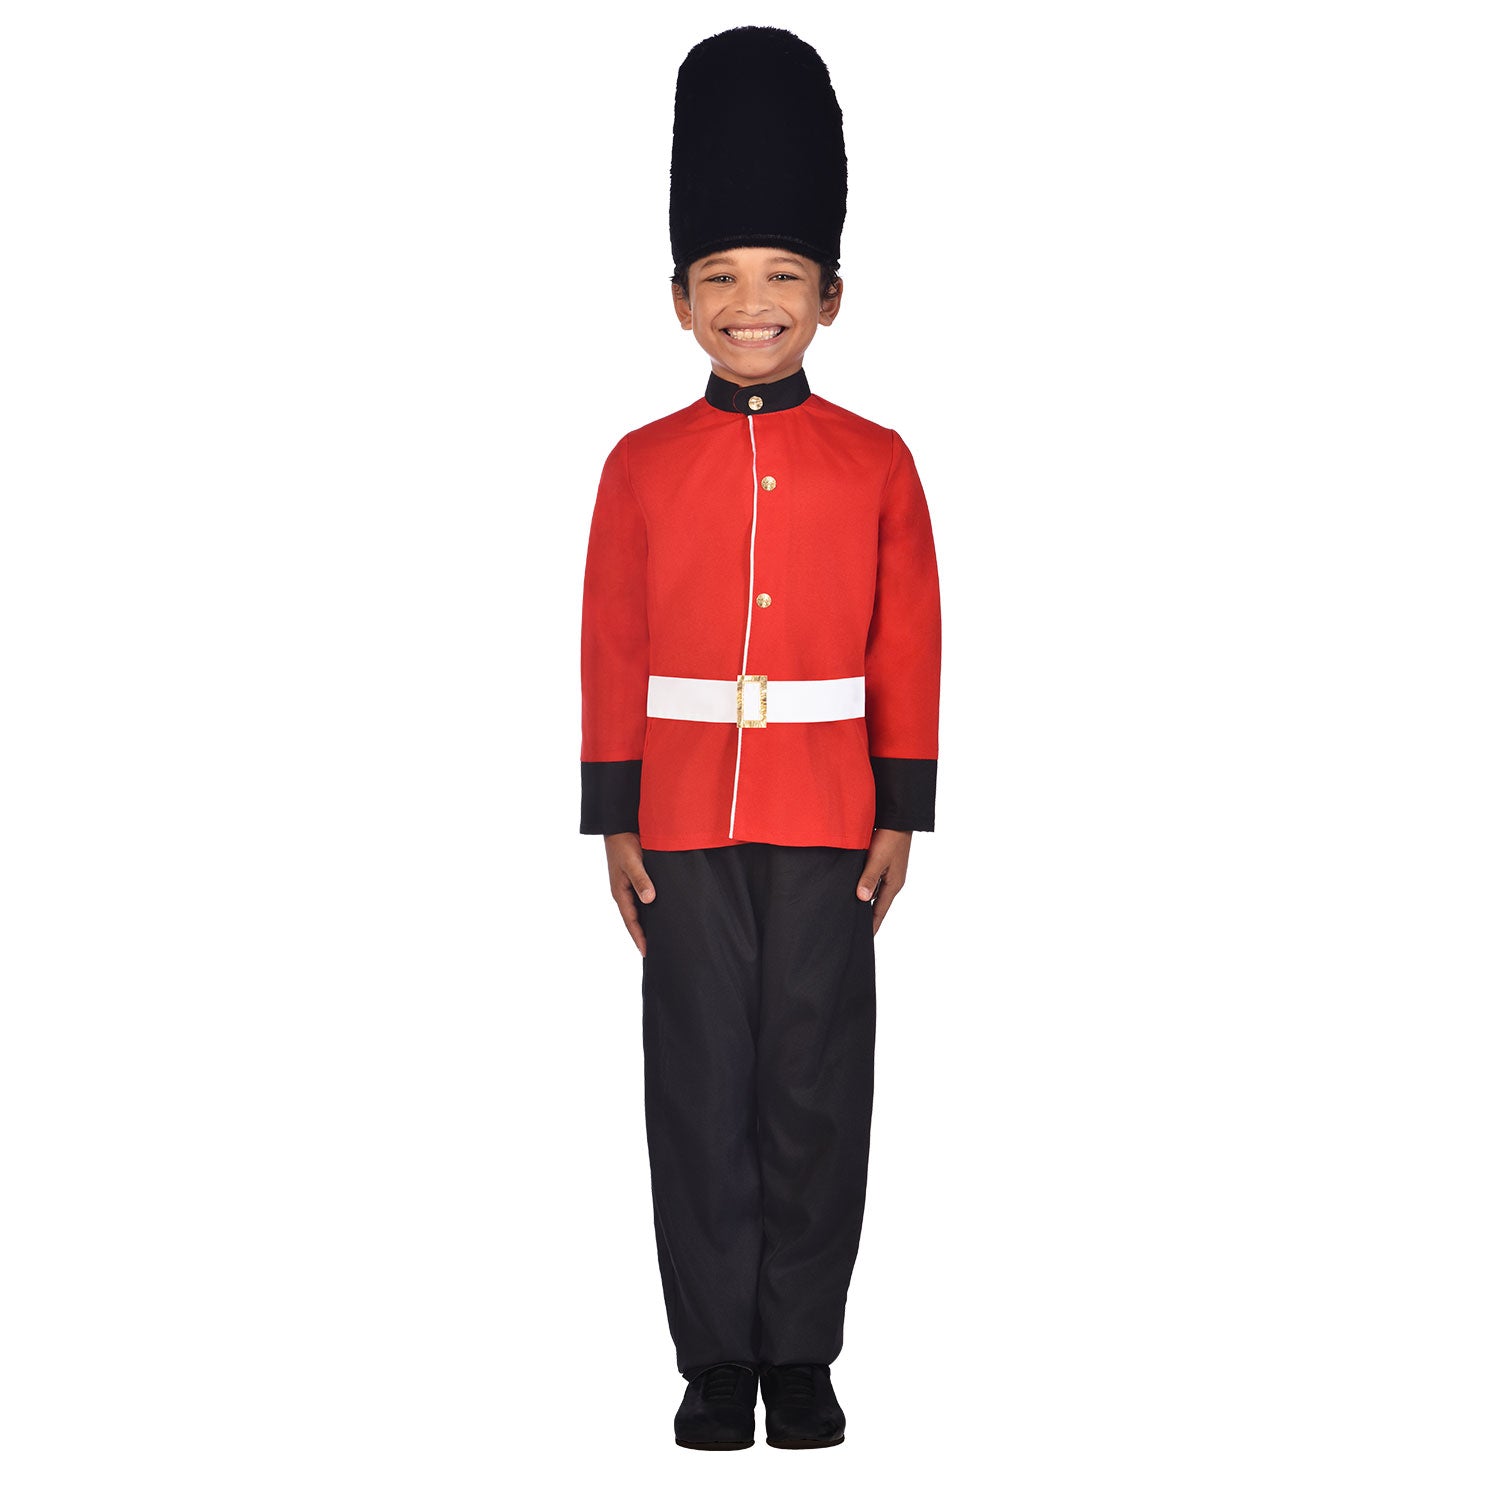 Child's Royal Guard Costume